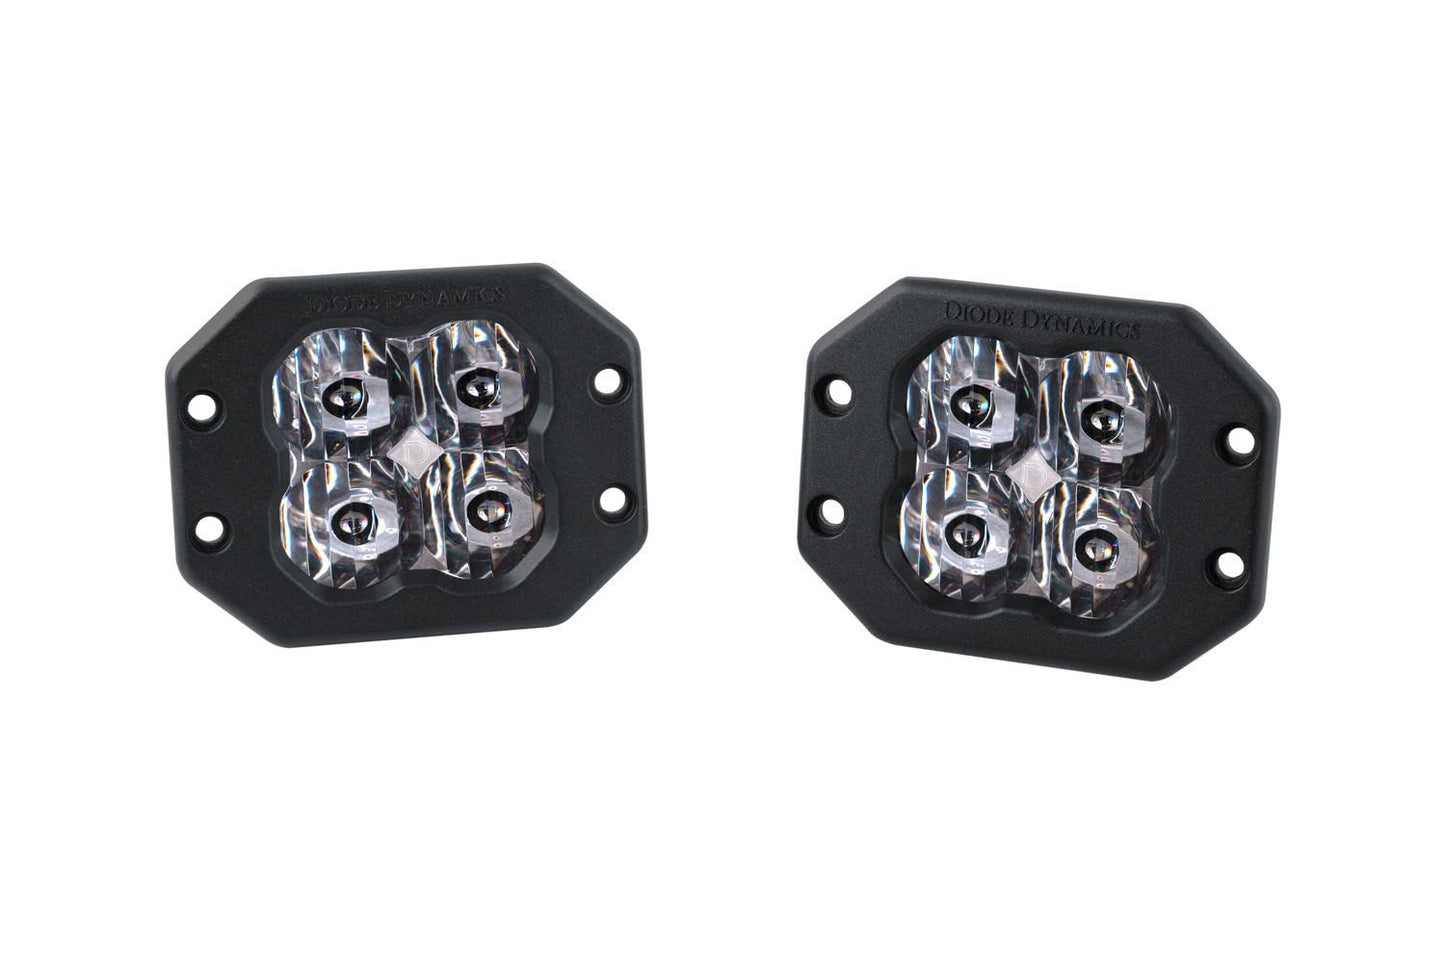 Diode Dynamics - Stage Series 3" SAE/DOT White Flush LED Pod (pair)